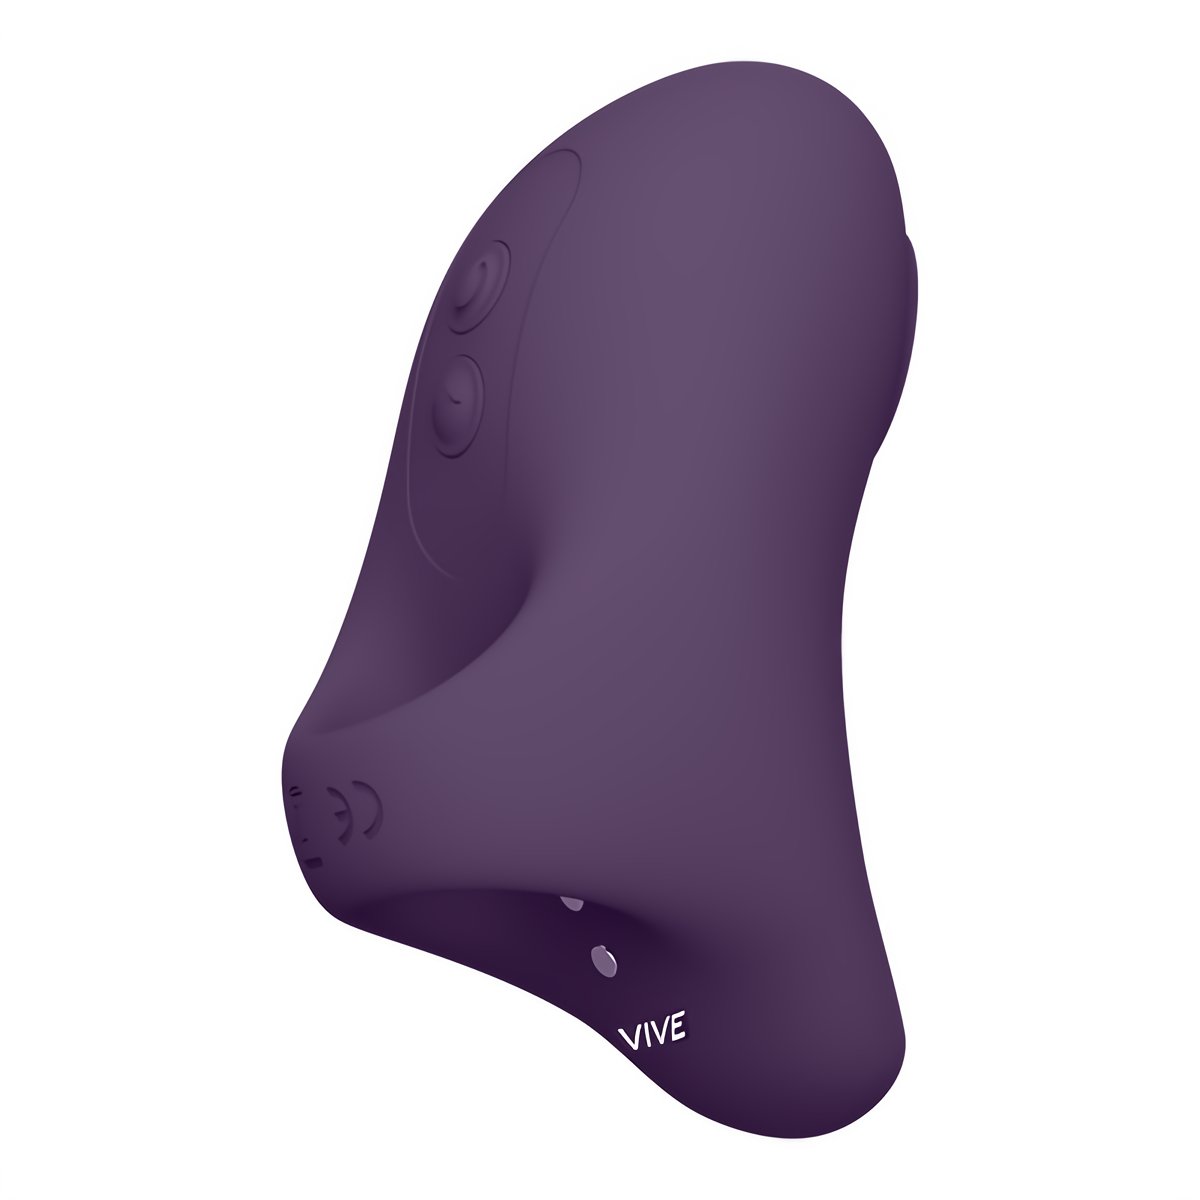 Hana - Pulse Wave Finger Vibrator - Purple - EroticToyzProducten,Toys,Vibrators,Vingervibrator,,VrouwelijkVIVE by Shots